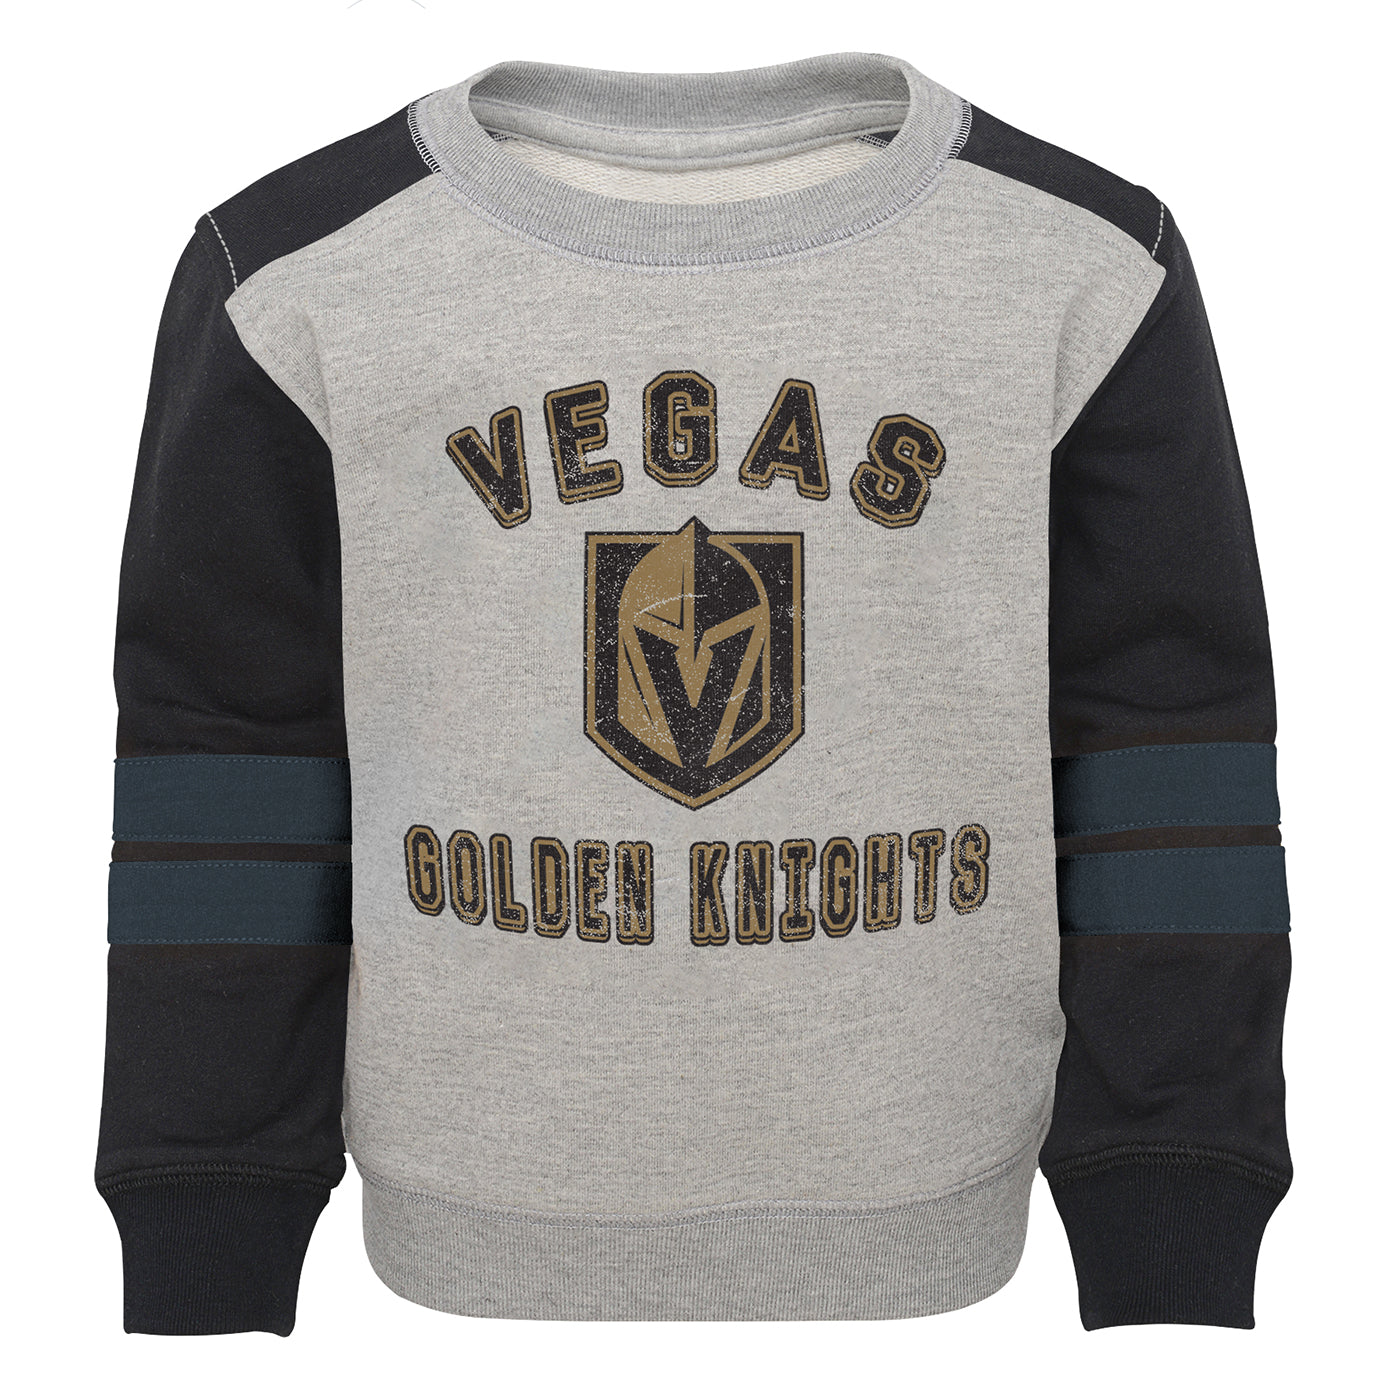  Outerstuff Vegas Golden Knights Toddler Sizes 2T-4T